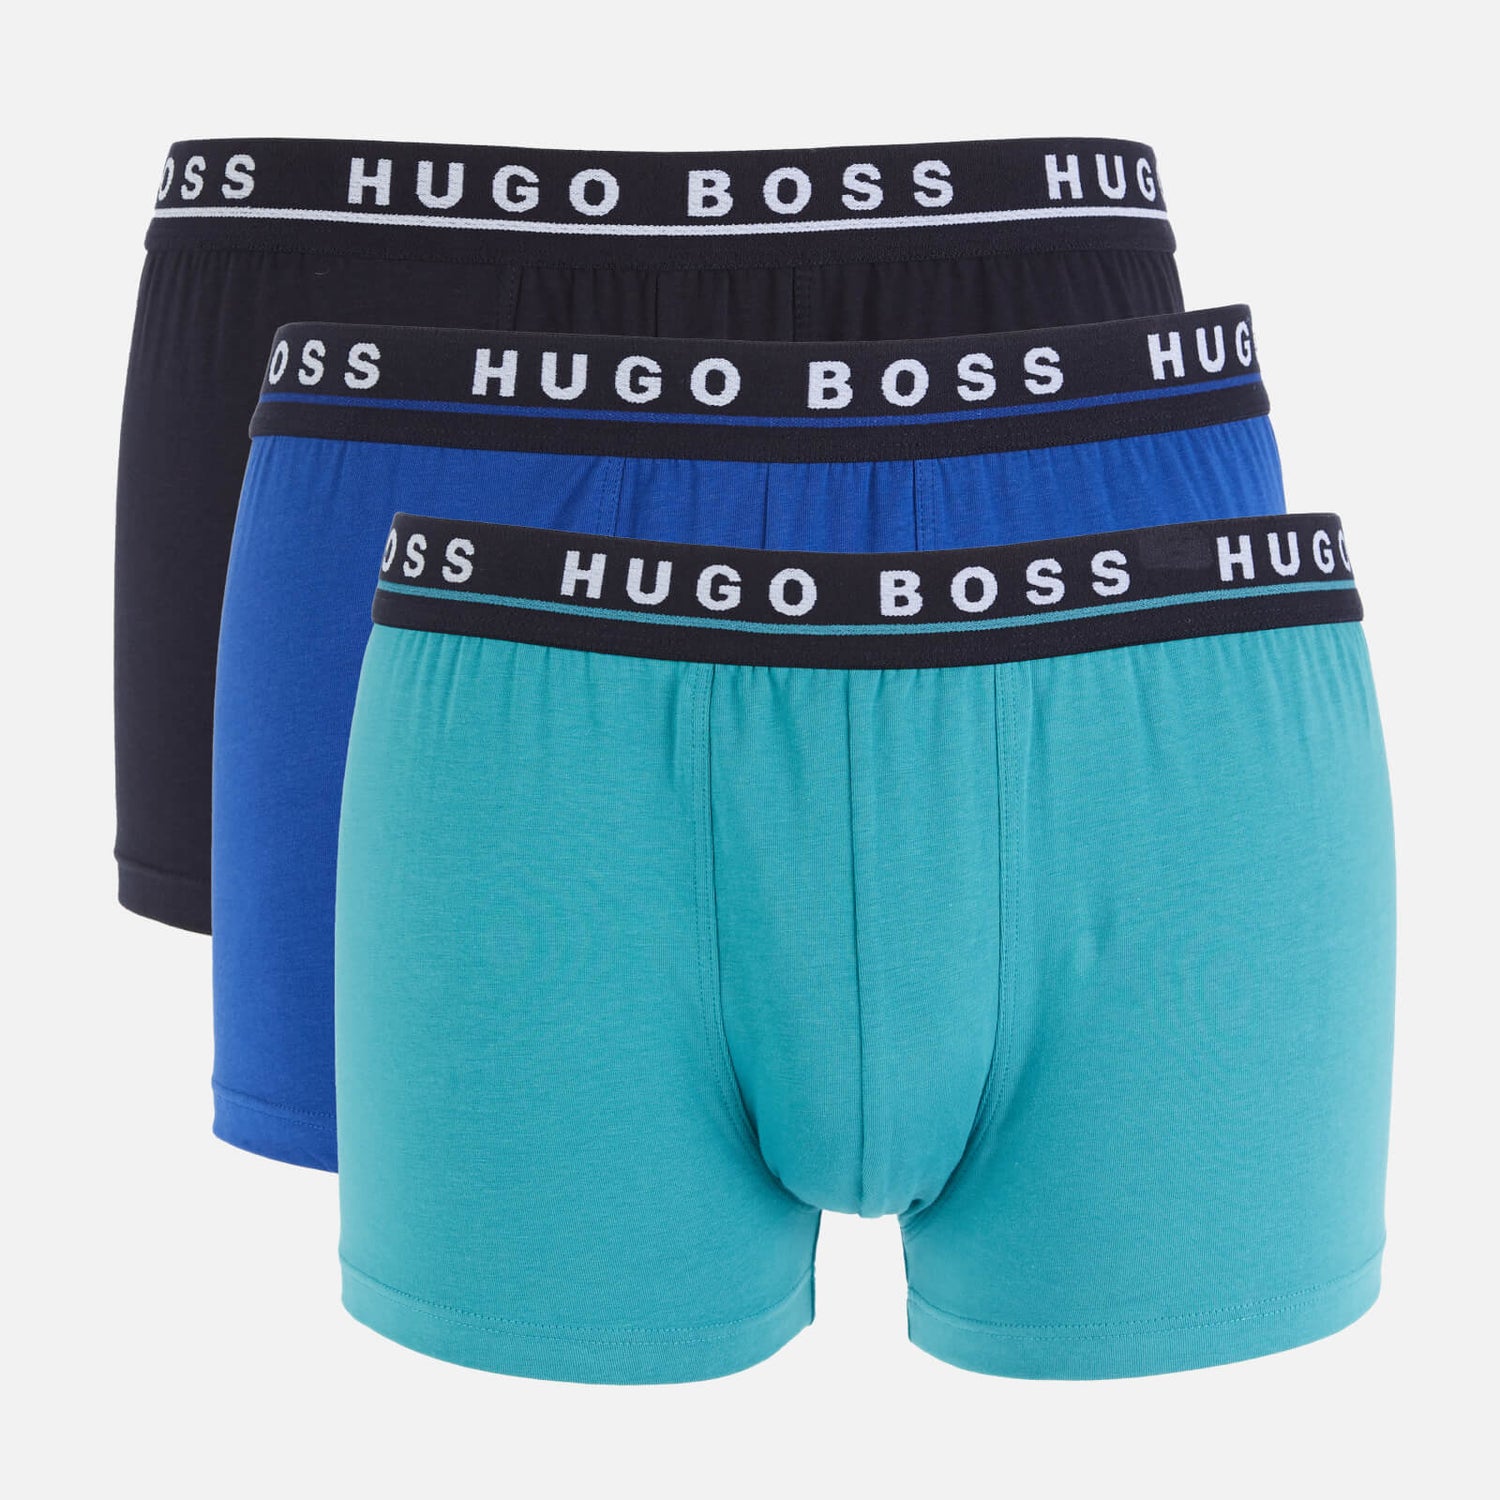 BOSS Bodywear Men's 3 Pack Trunk Boxer Shorts - Blue/Green/Black